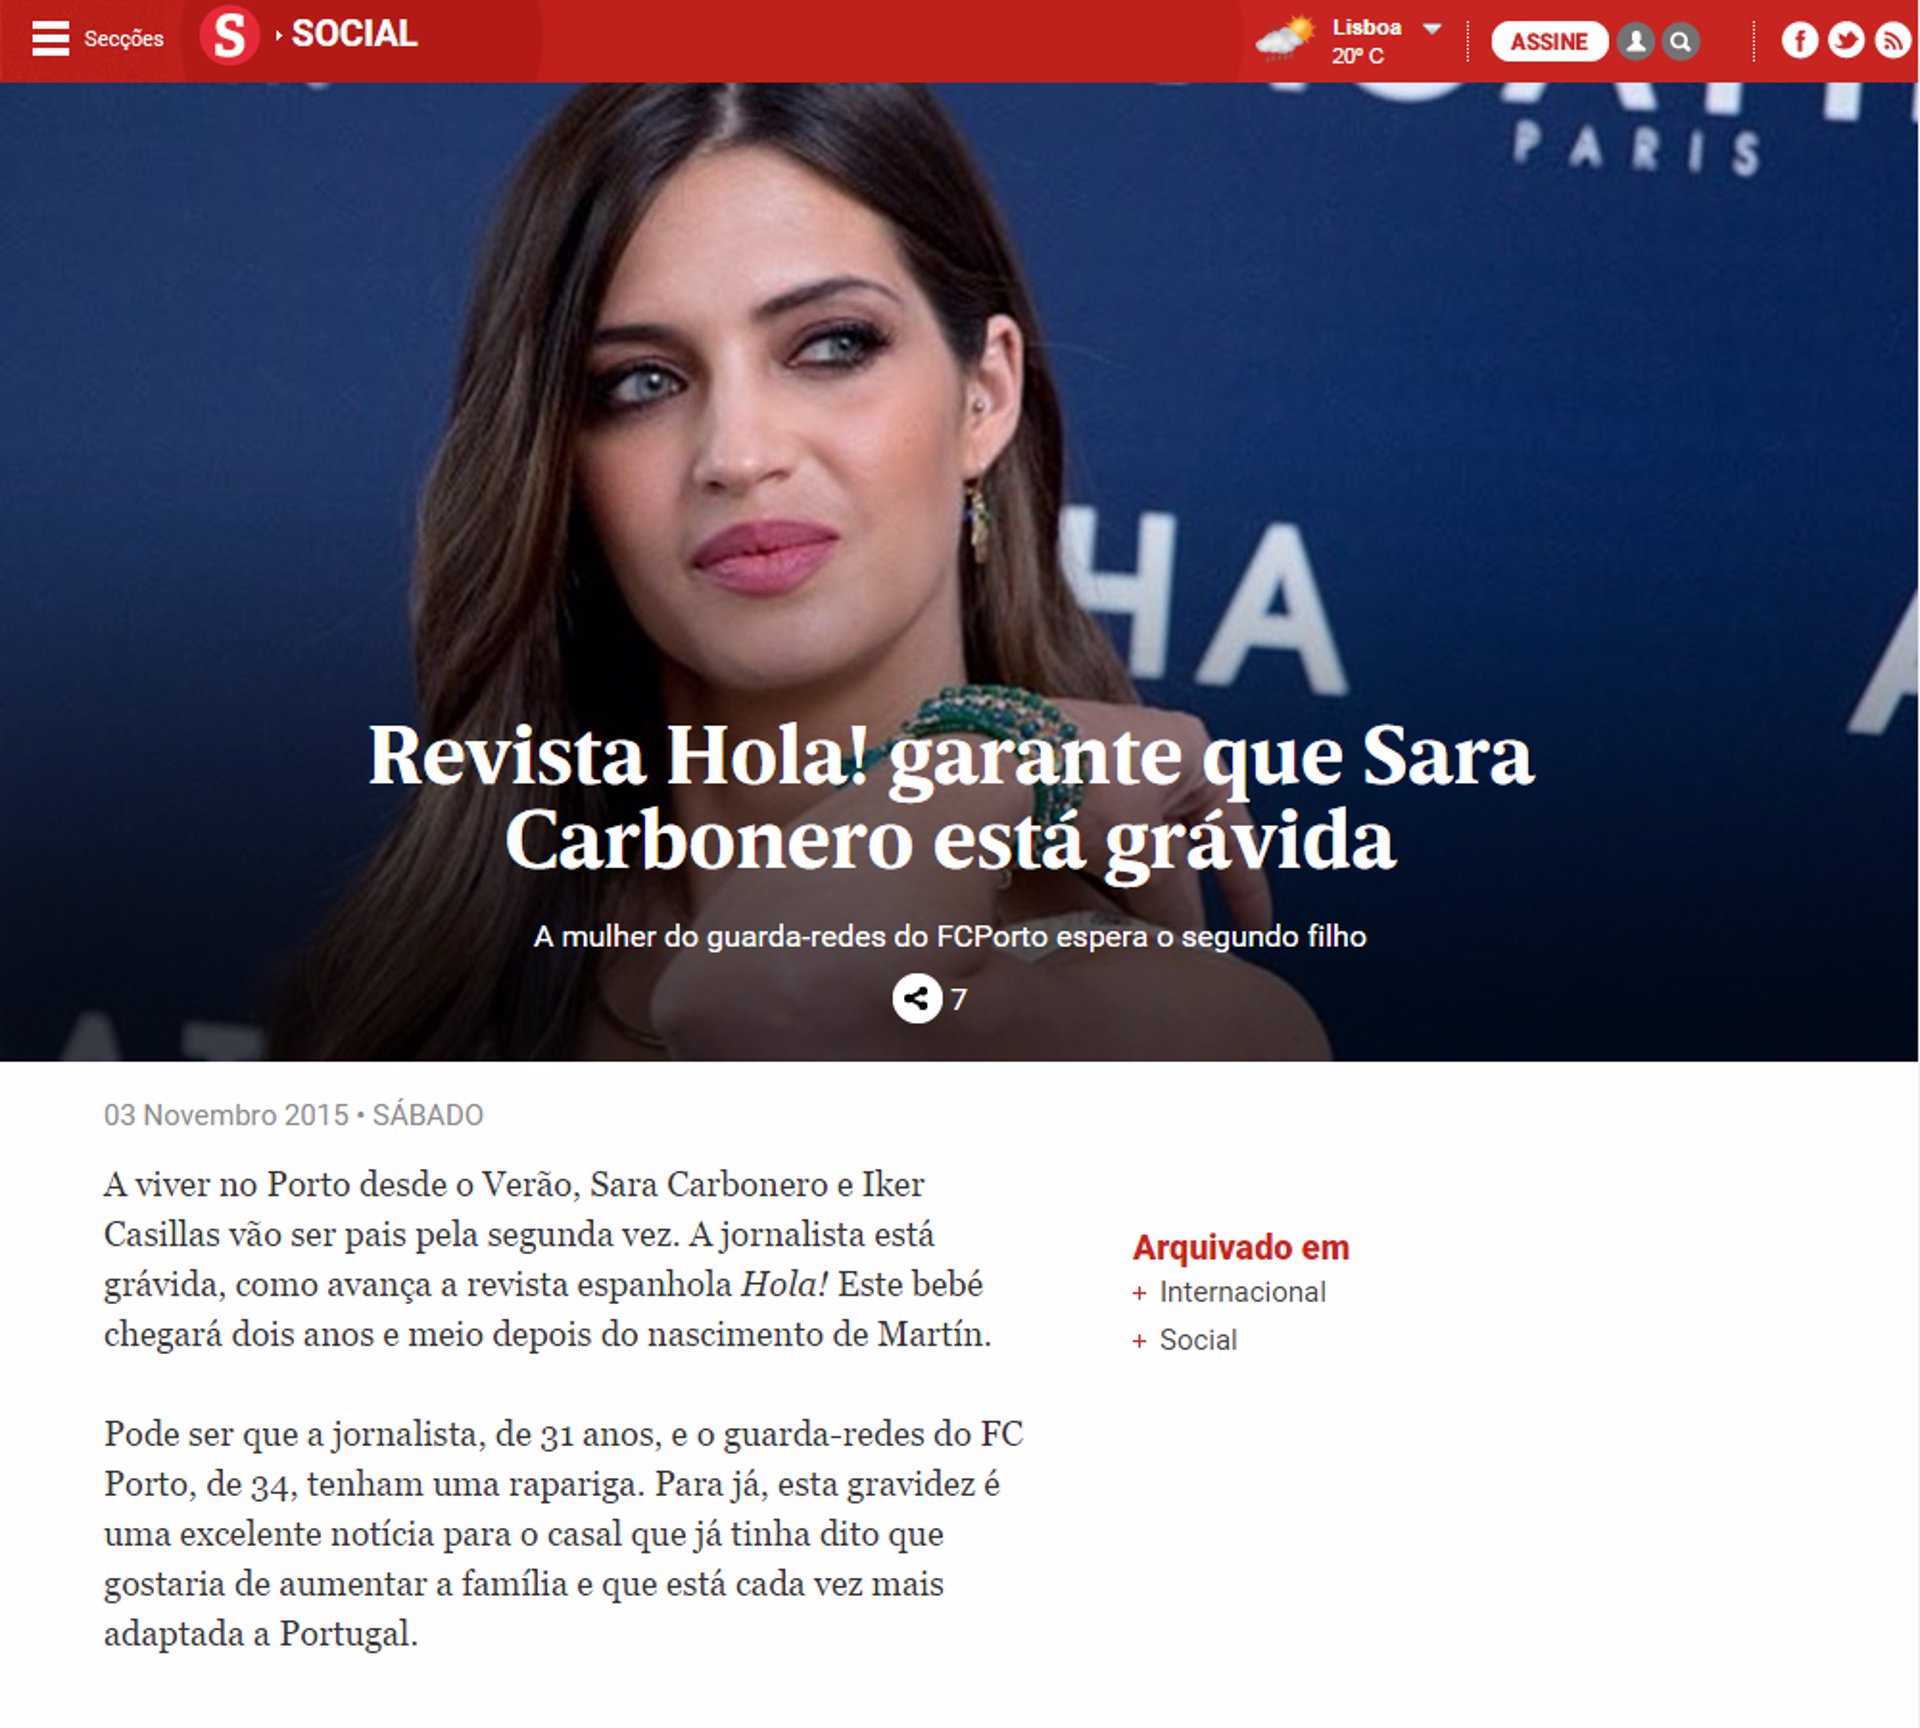 sara carbonero en la prensa portuguesa